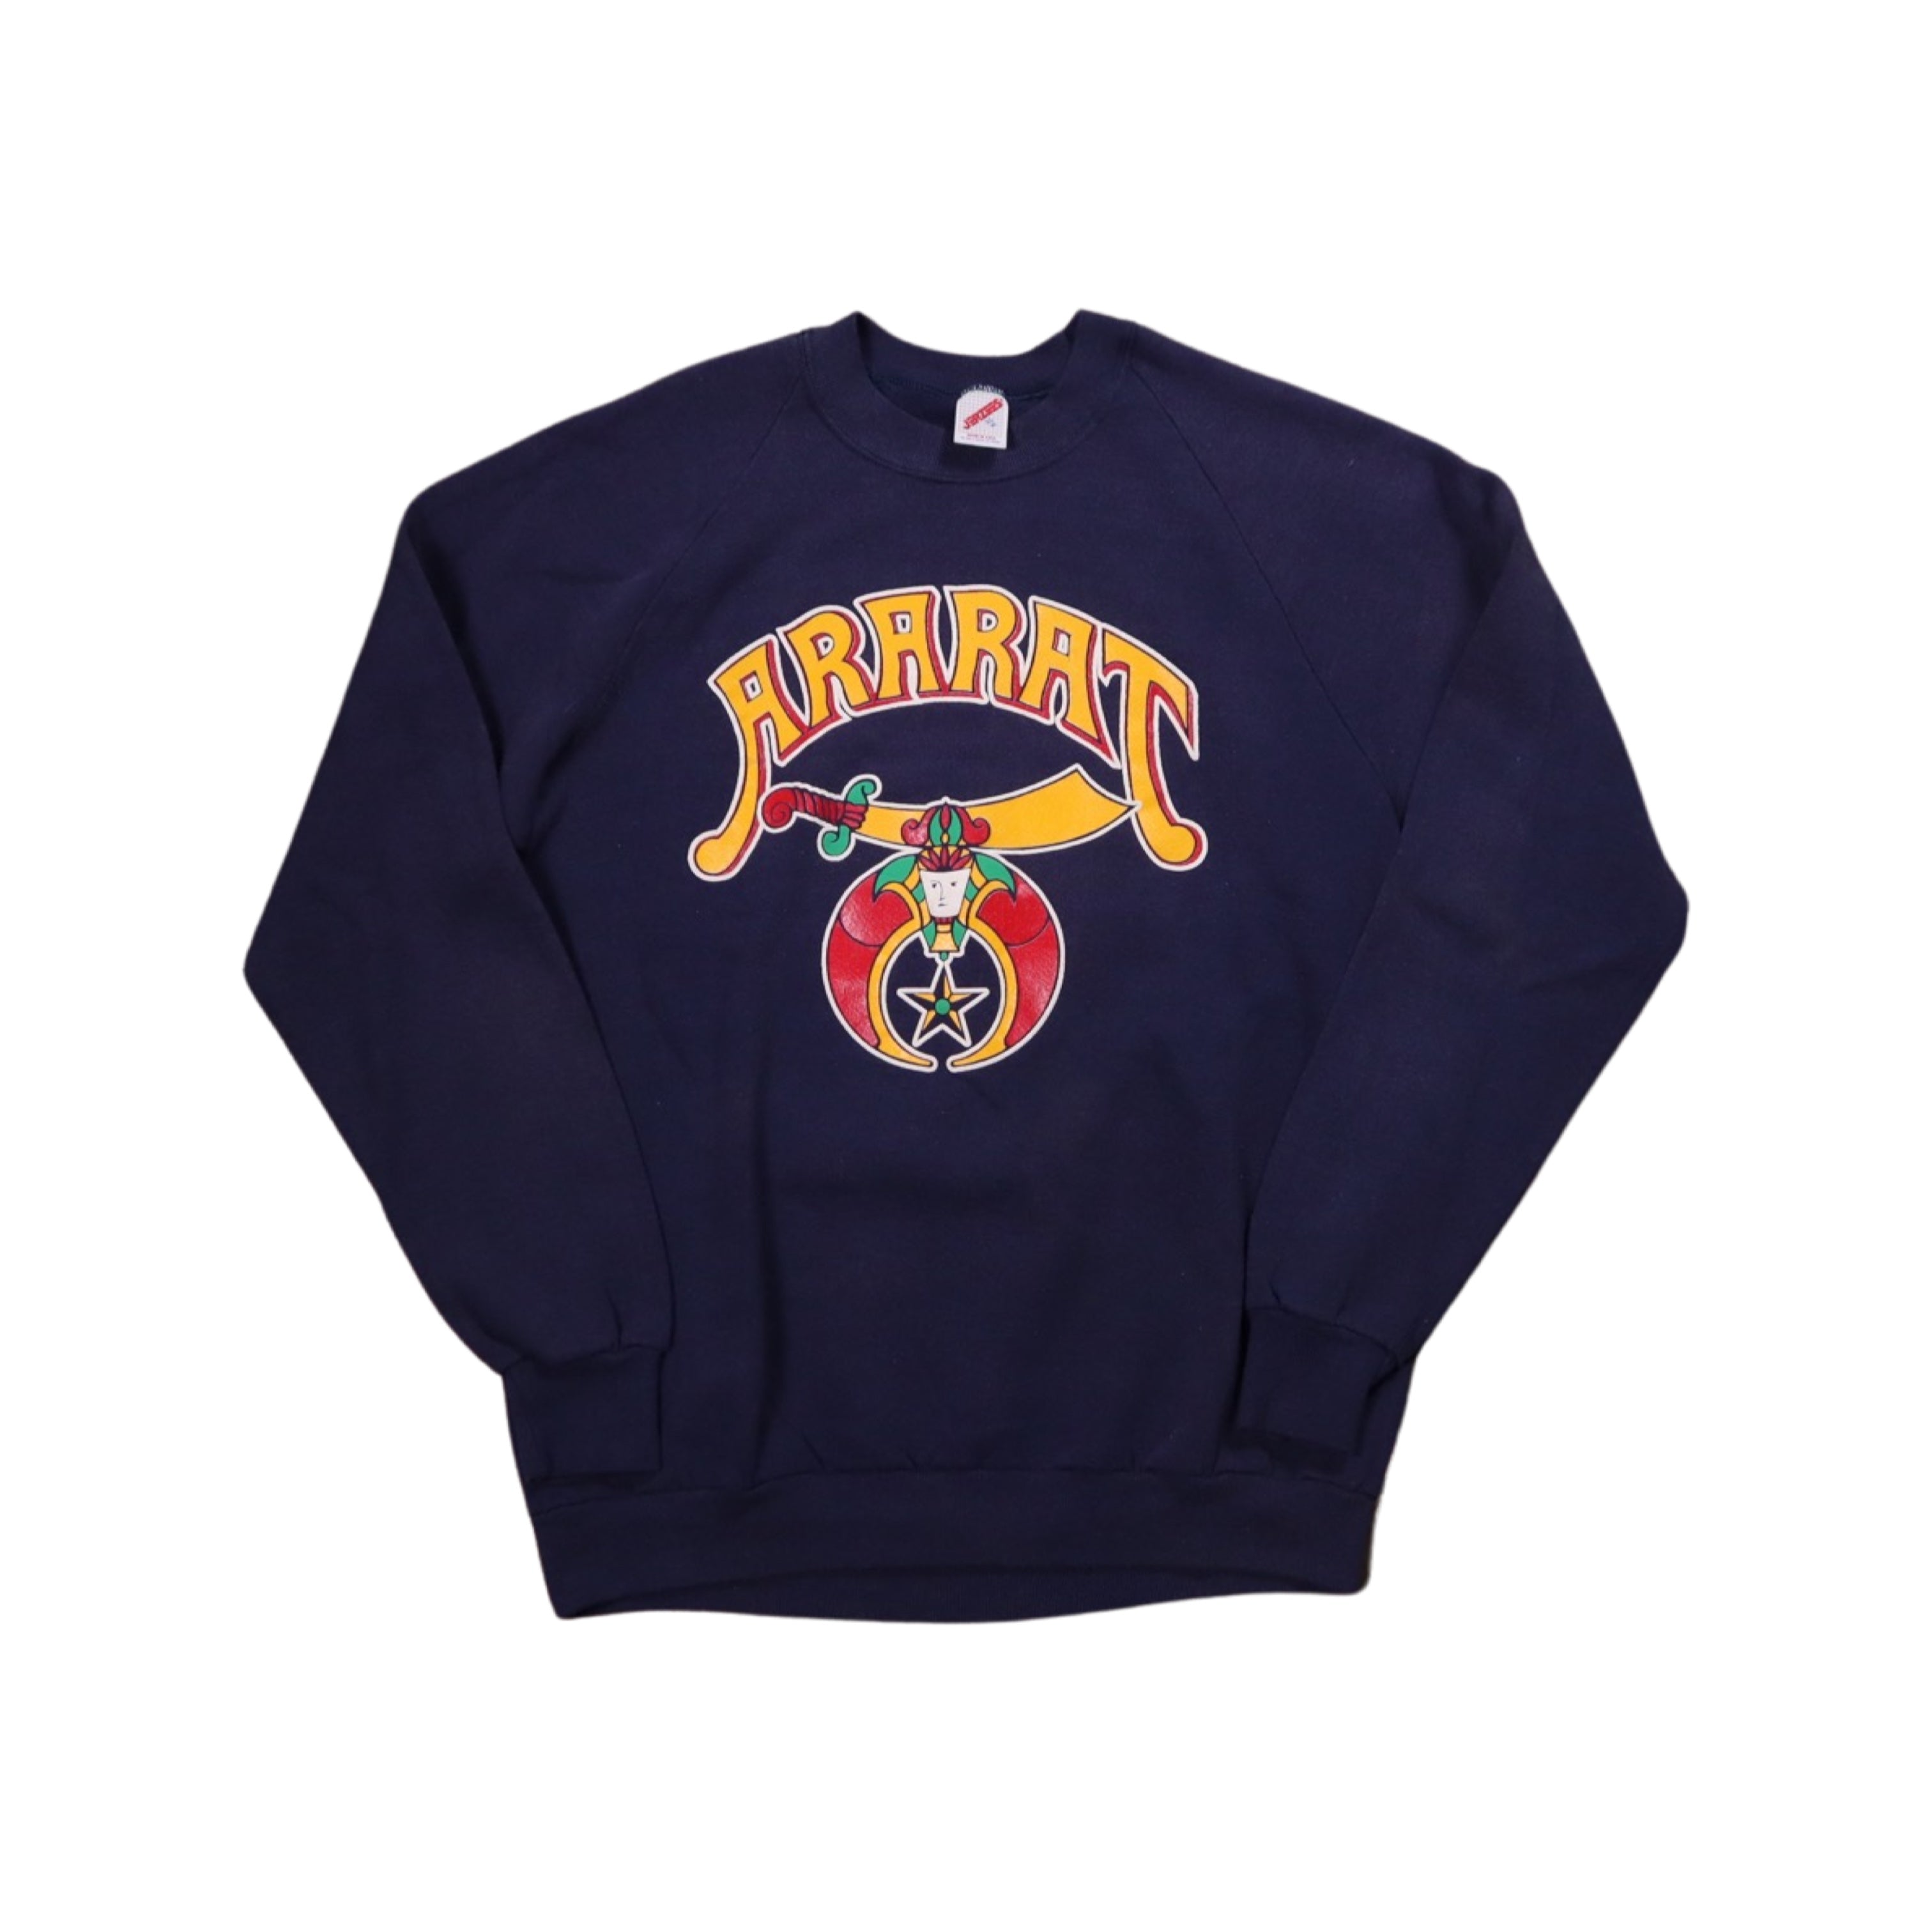 Ararat 80s/90s Sweater (Large)